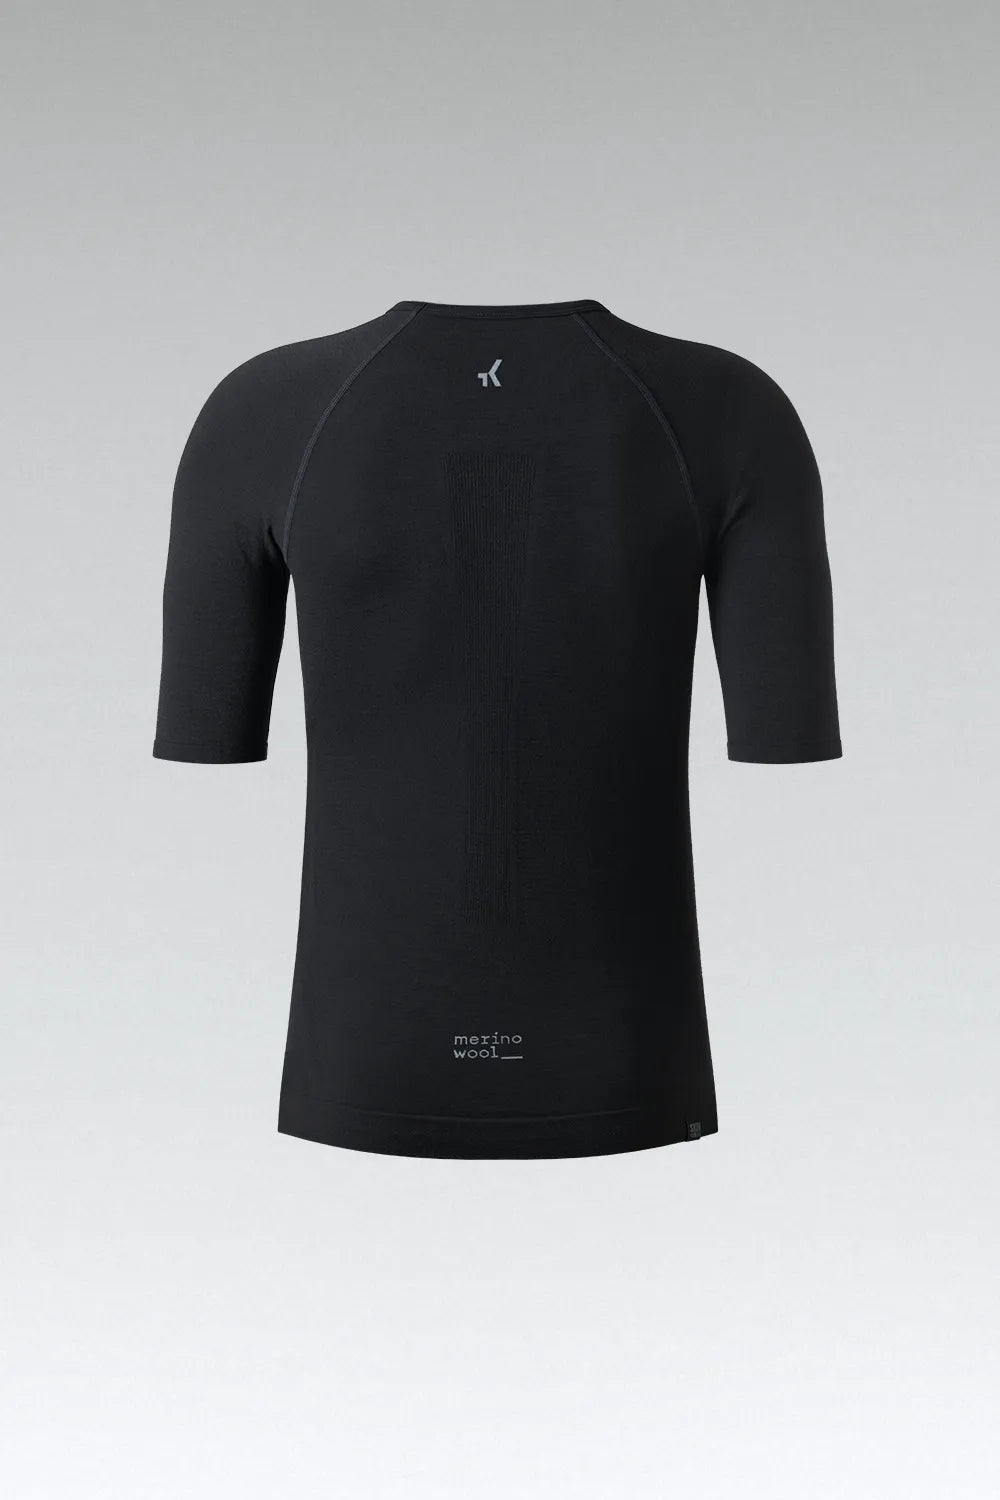 Ropa interior térmica para hombre: camiseta de manga corta, lana de merino  orgánica de seda